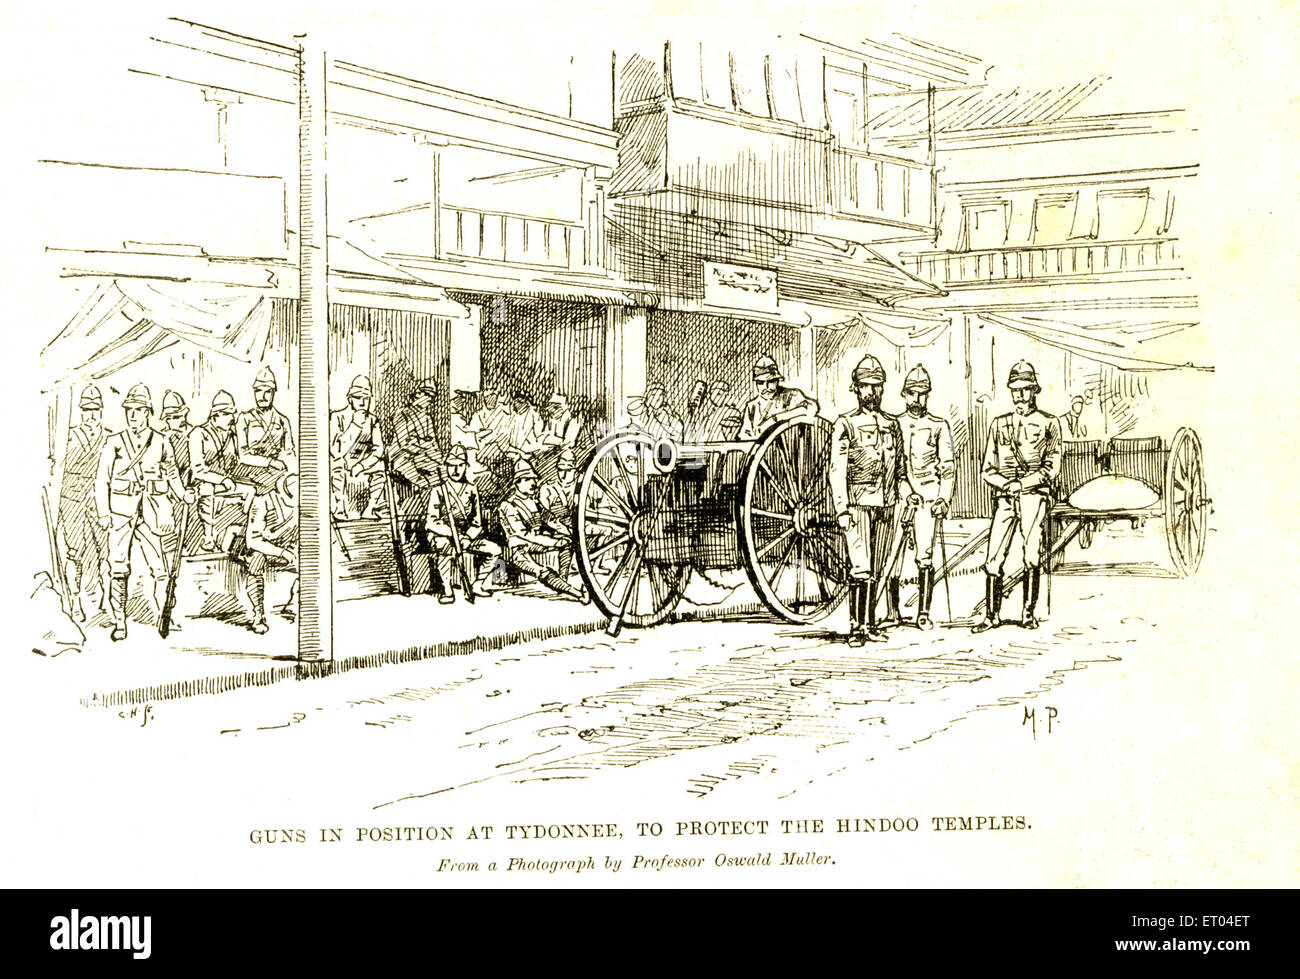 Guns in position at Tydonnee to protect Hindu temples ; 9th September 1893 ; Bombay now Mumbai ; Maharashtra ; India Stock Photo